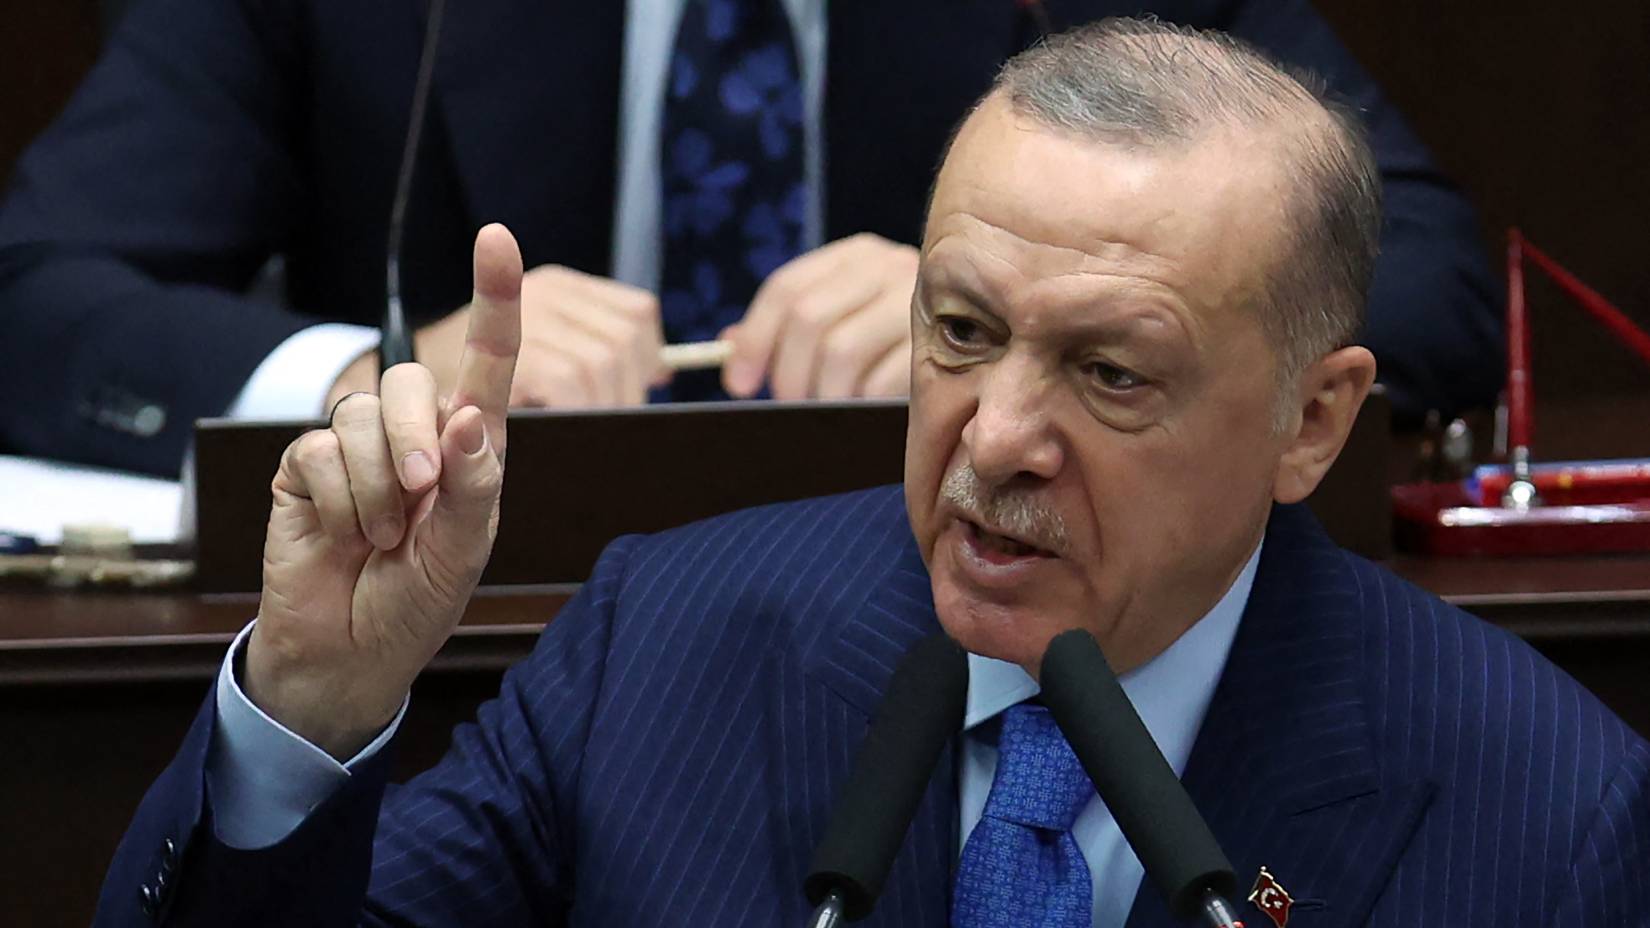 Erdoğan sparks outrage in medical community with remarks targeting doctors 132